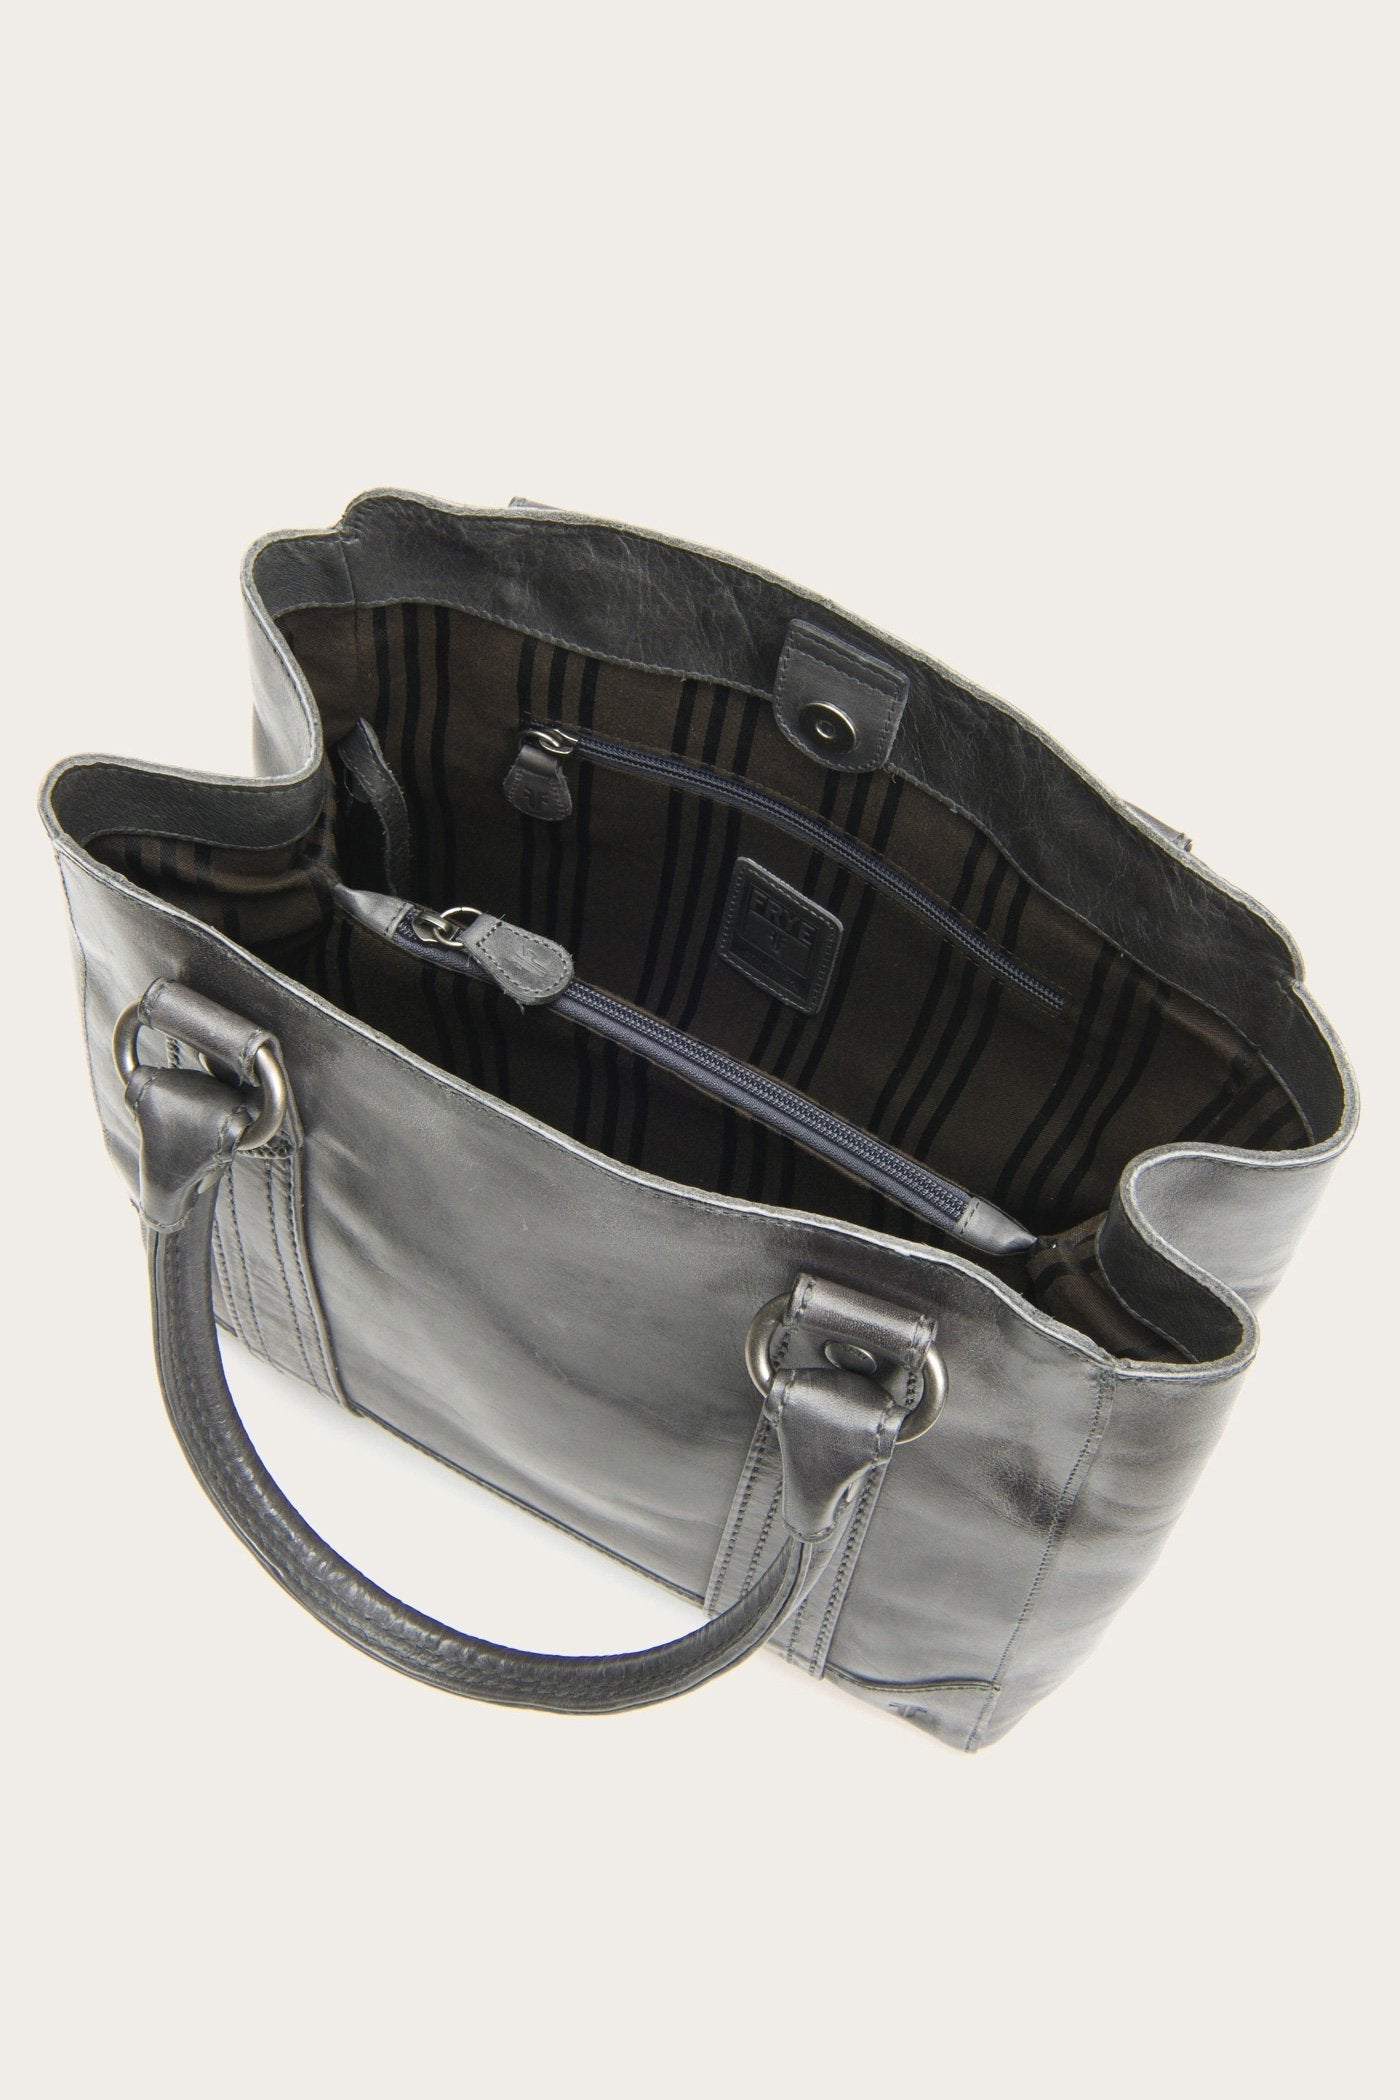 Frye Deborah Shoulder Bag | Bags, Shoulder handbags, Leather handbags tote